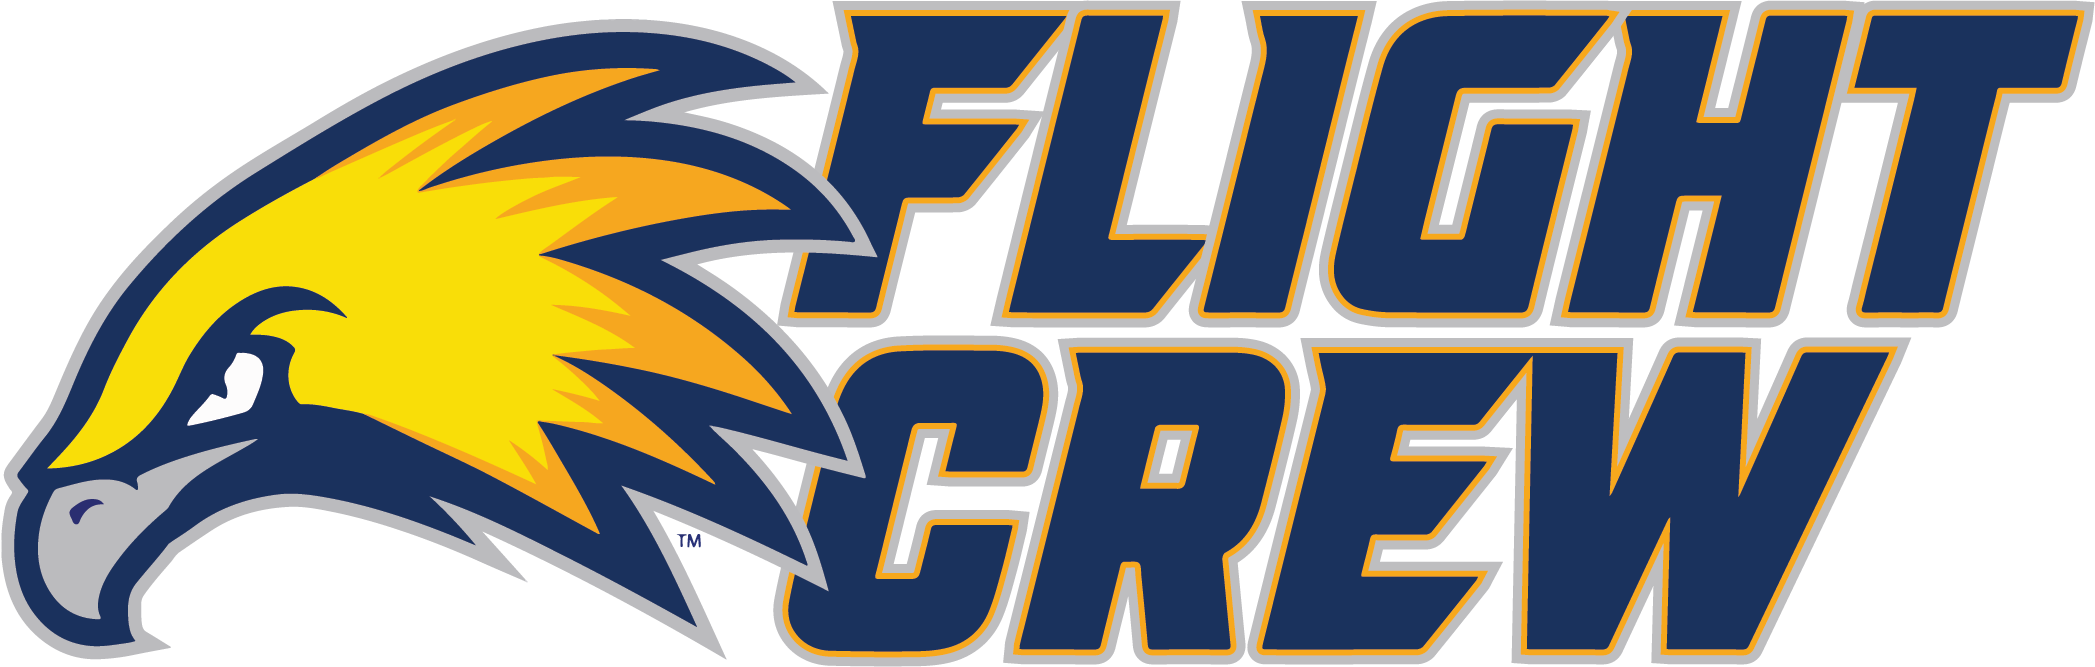 Flght Crew logo